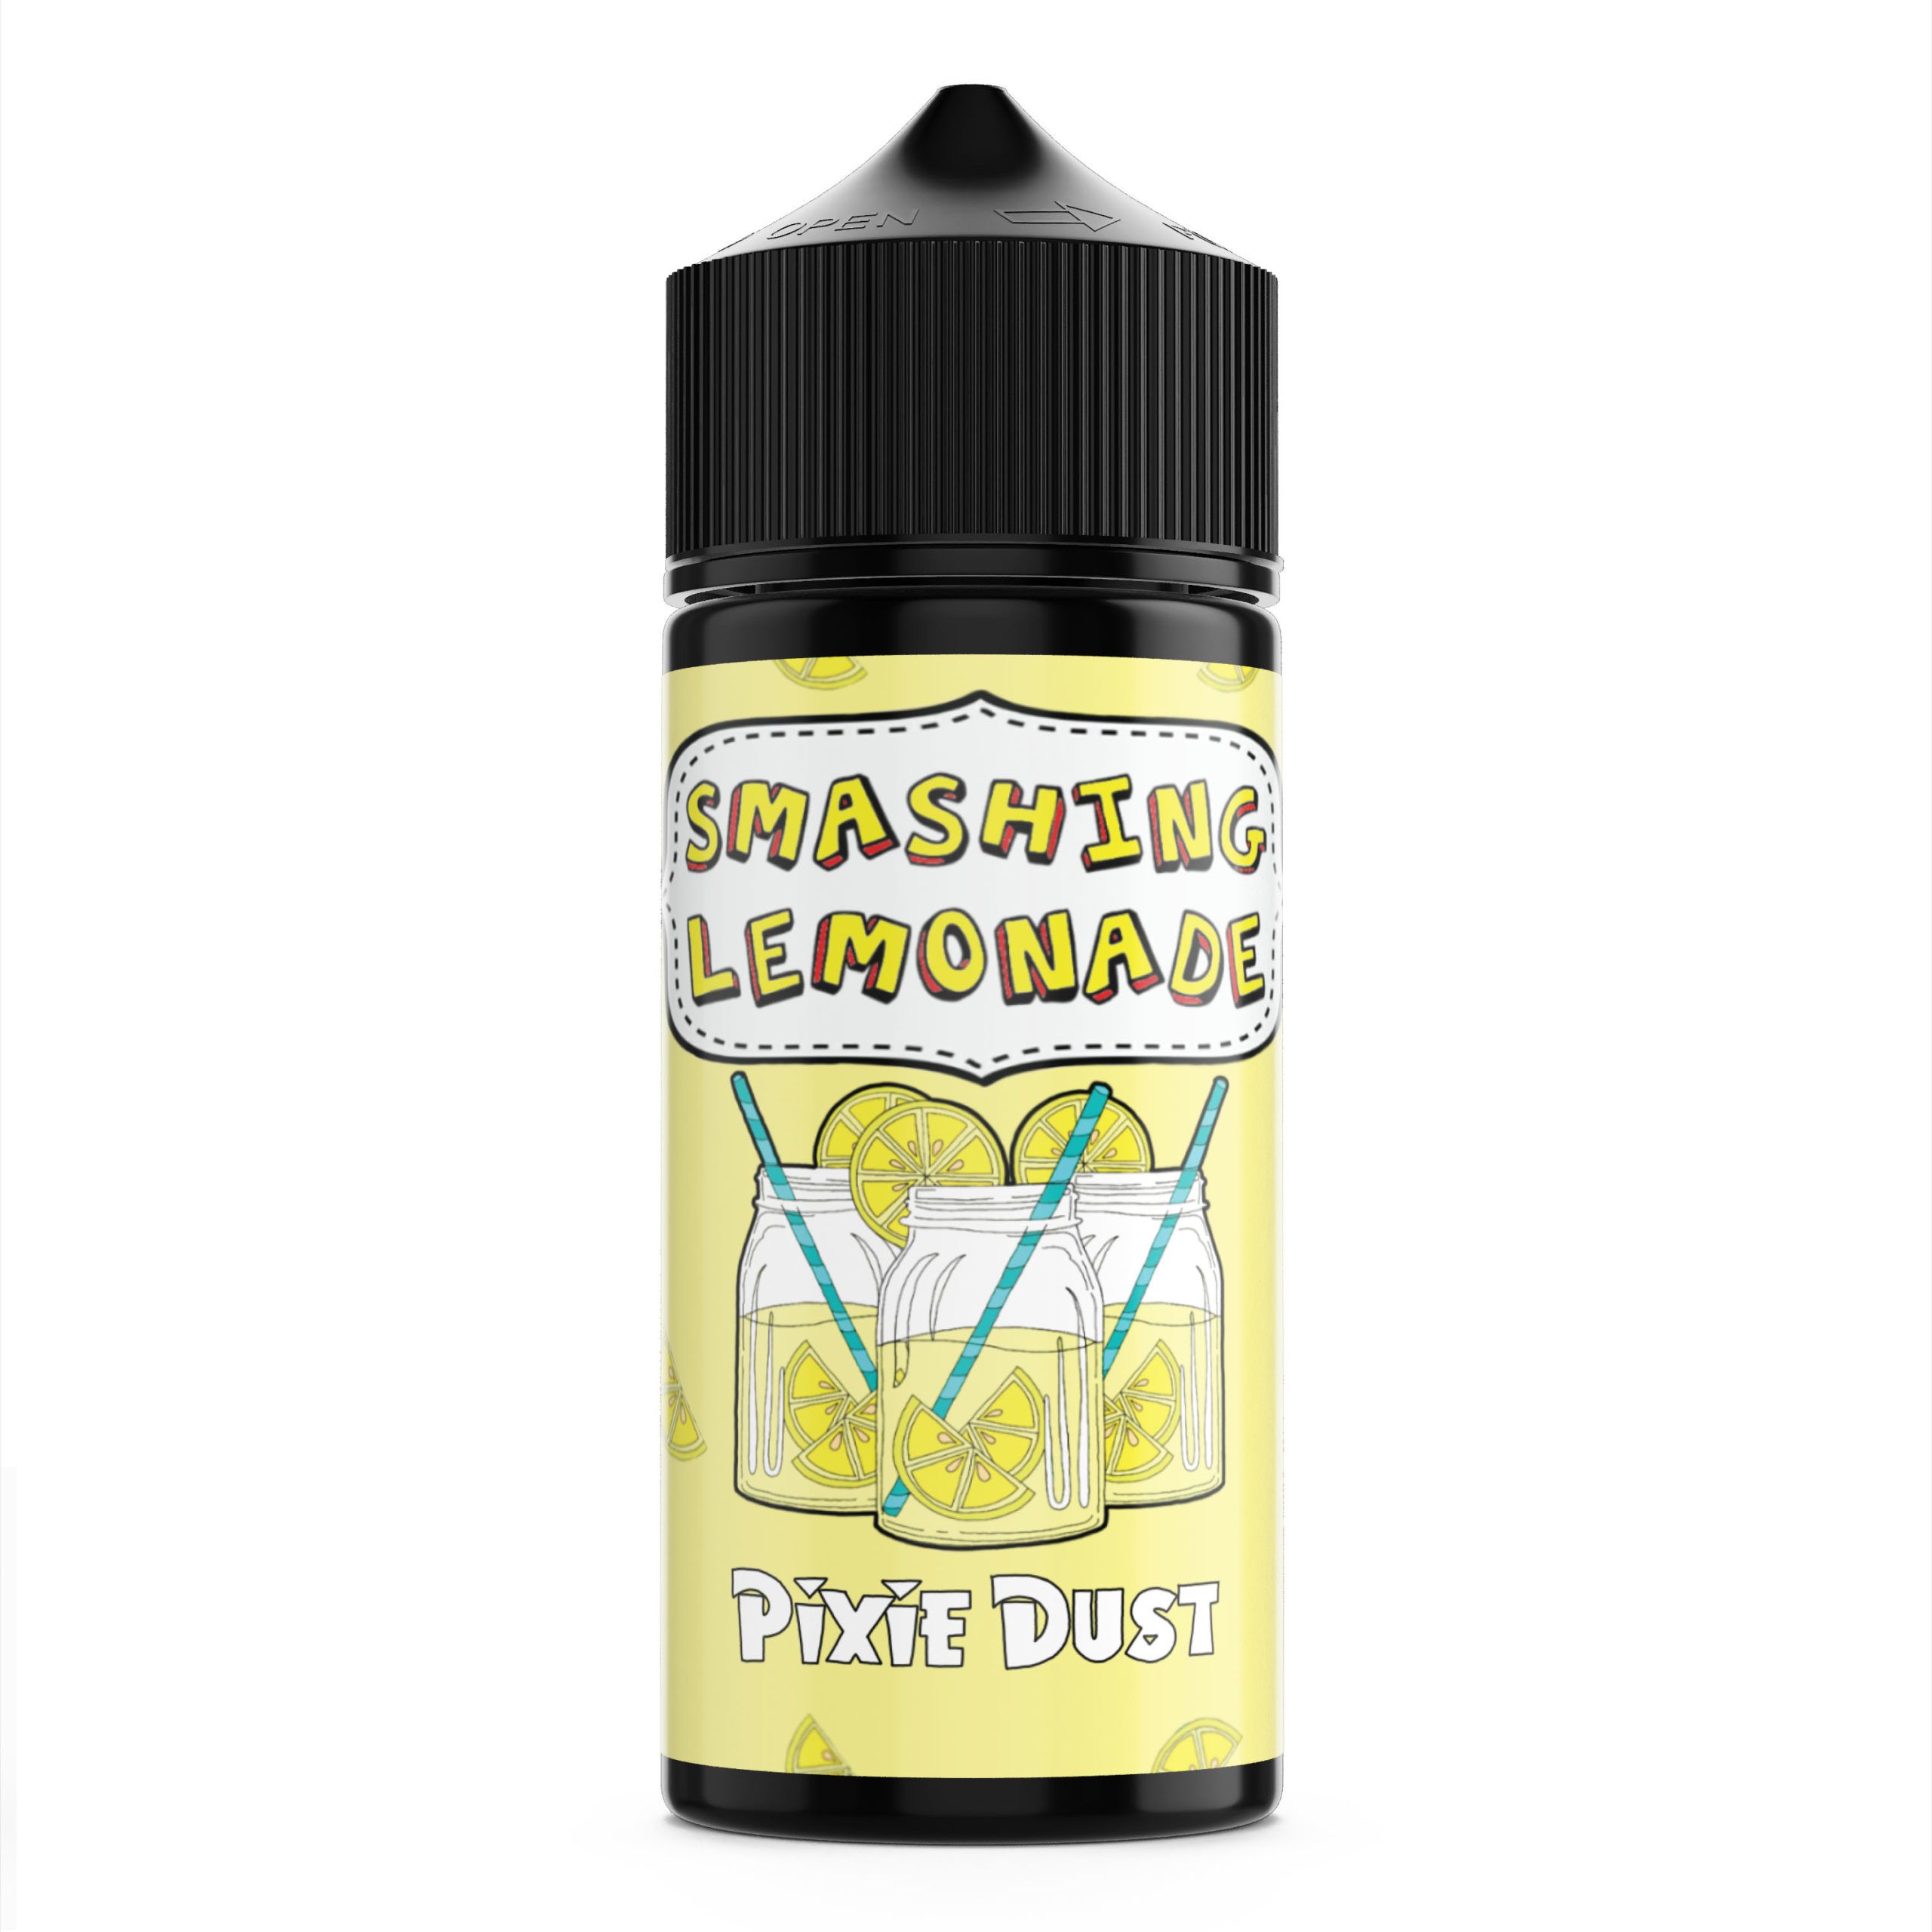 images/virtuemart/product/Pixie Dust - Smashing Lemonade (100ml).jpg